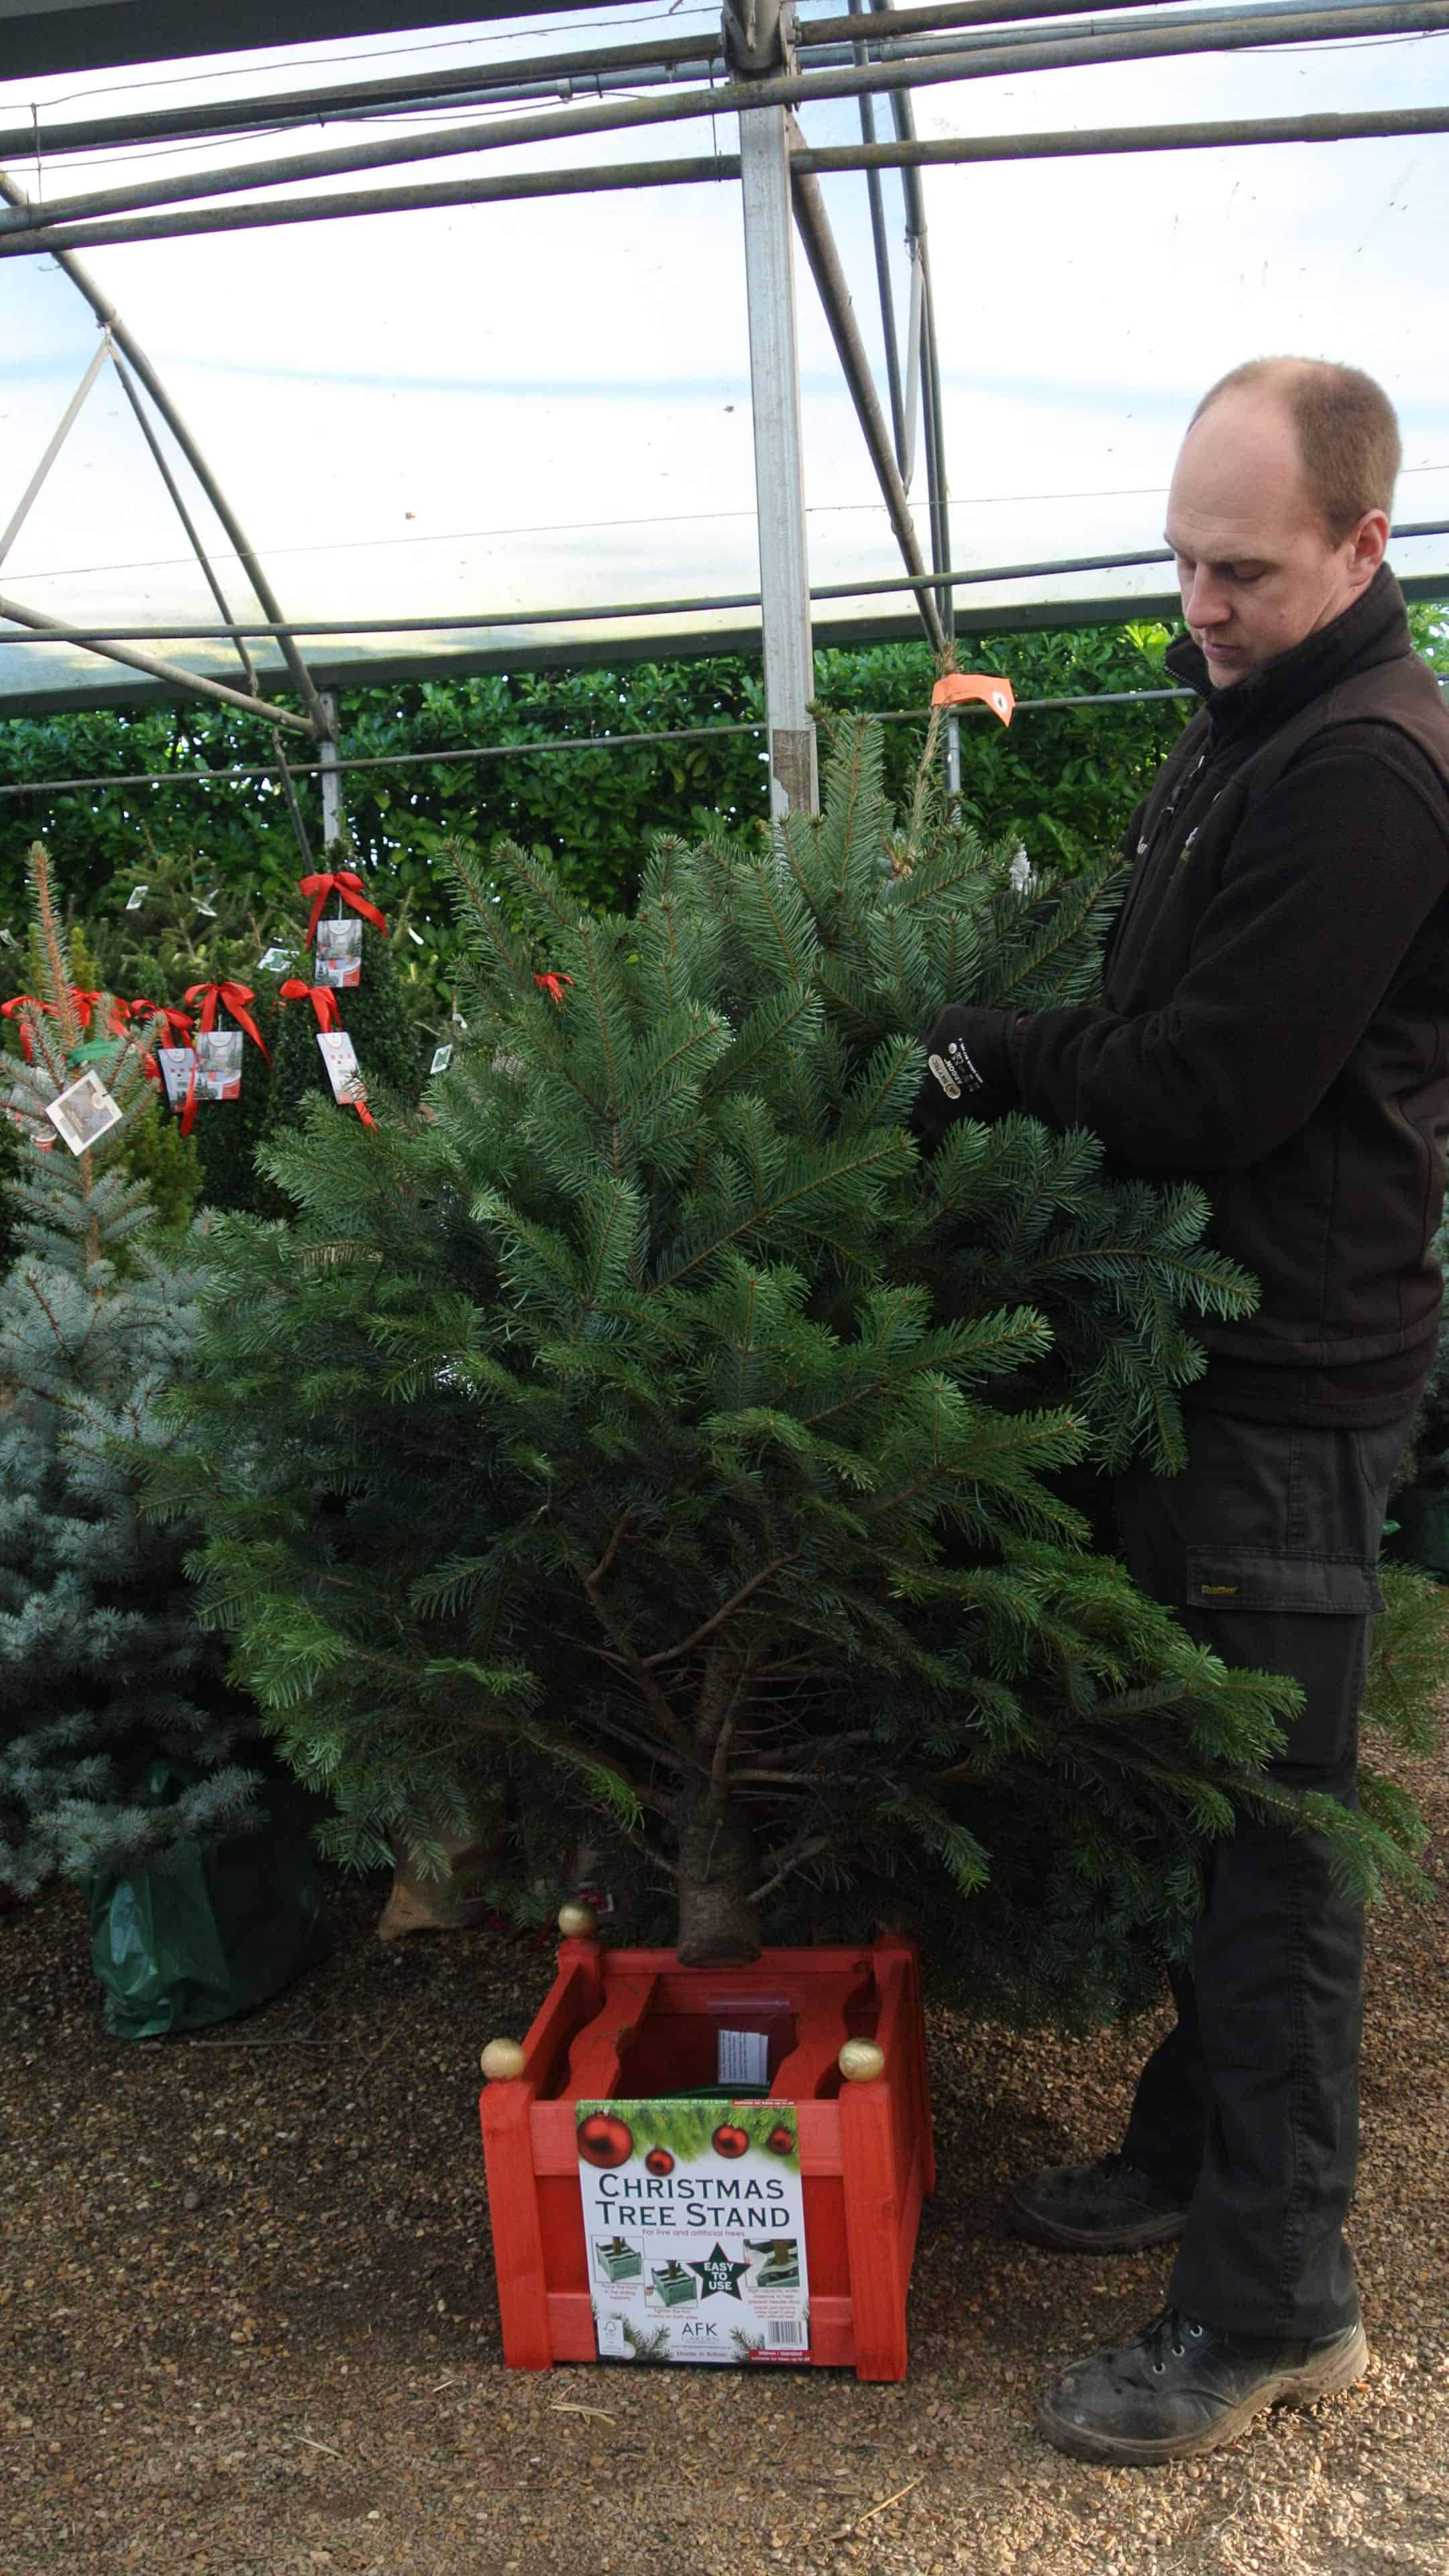 Chris straining to lift a Christmas tree